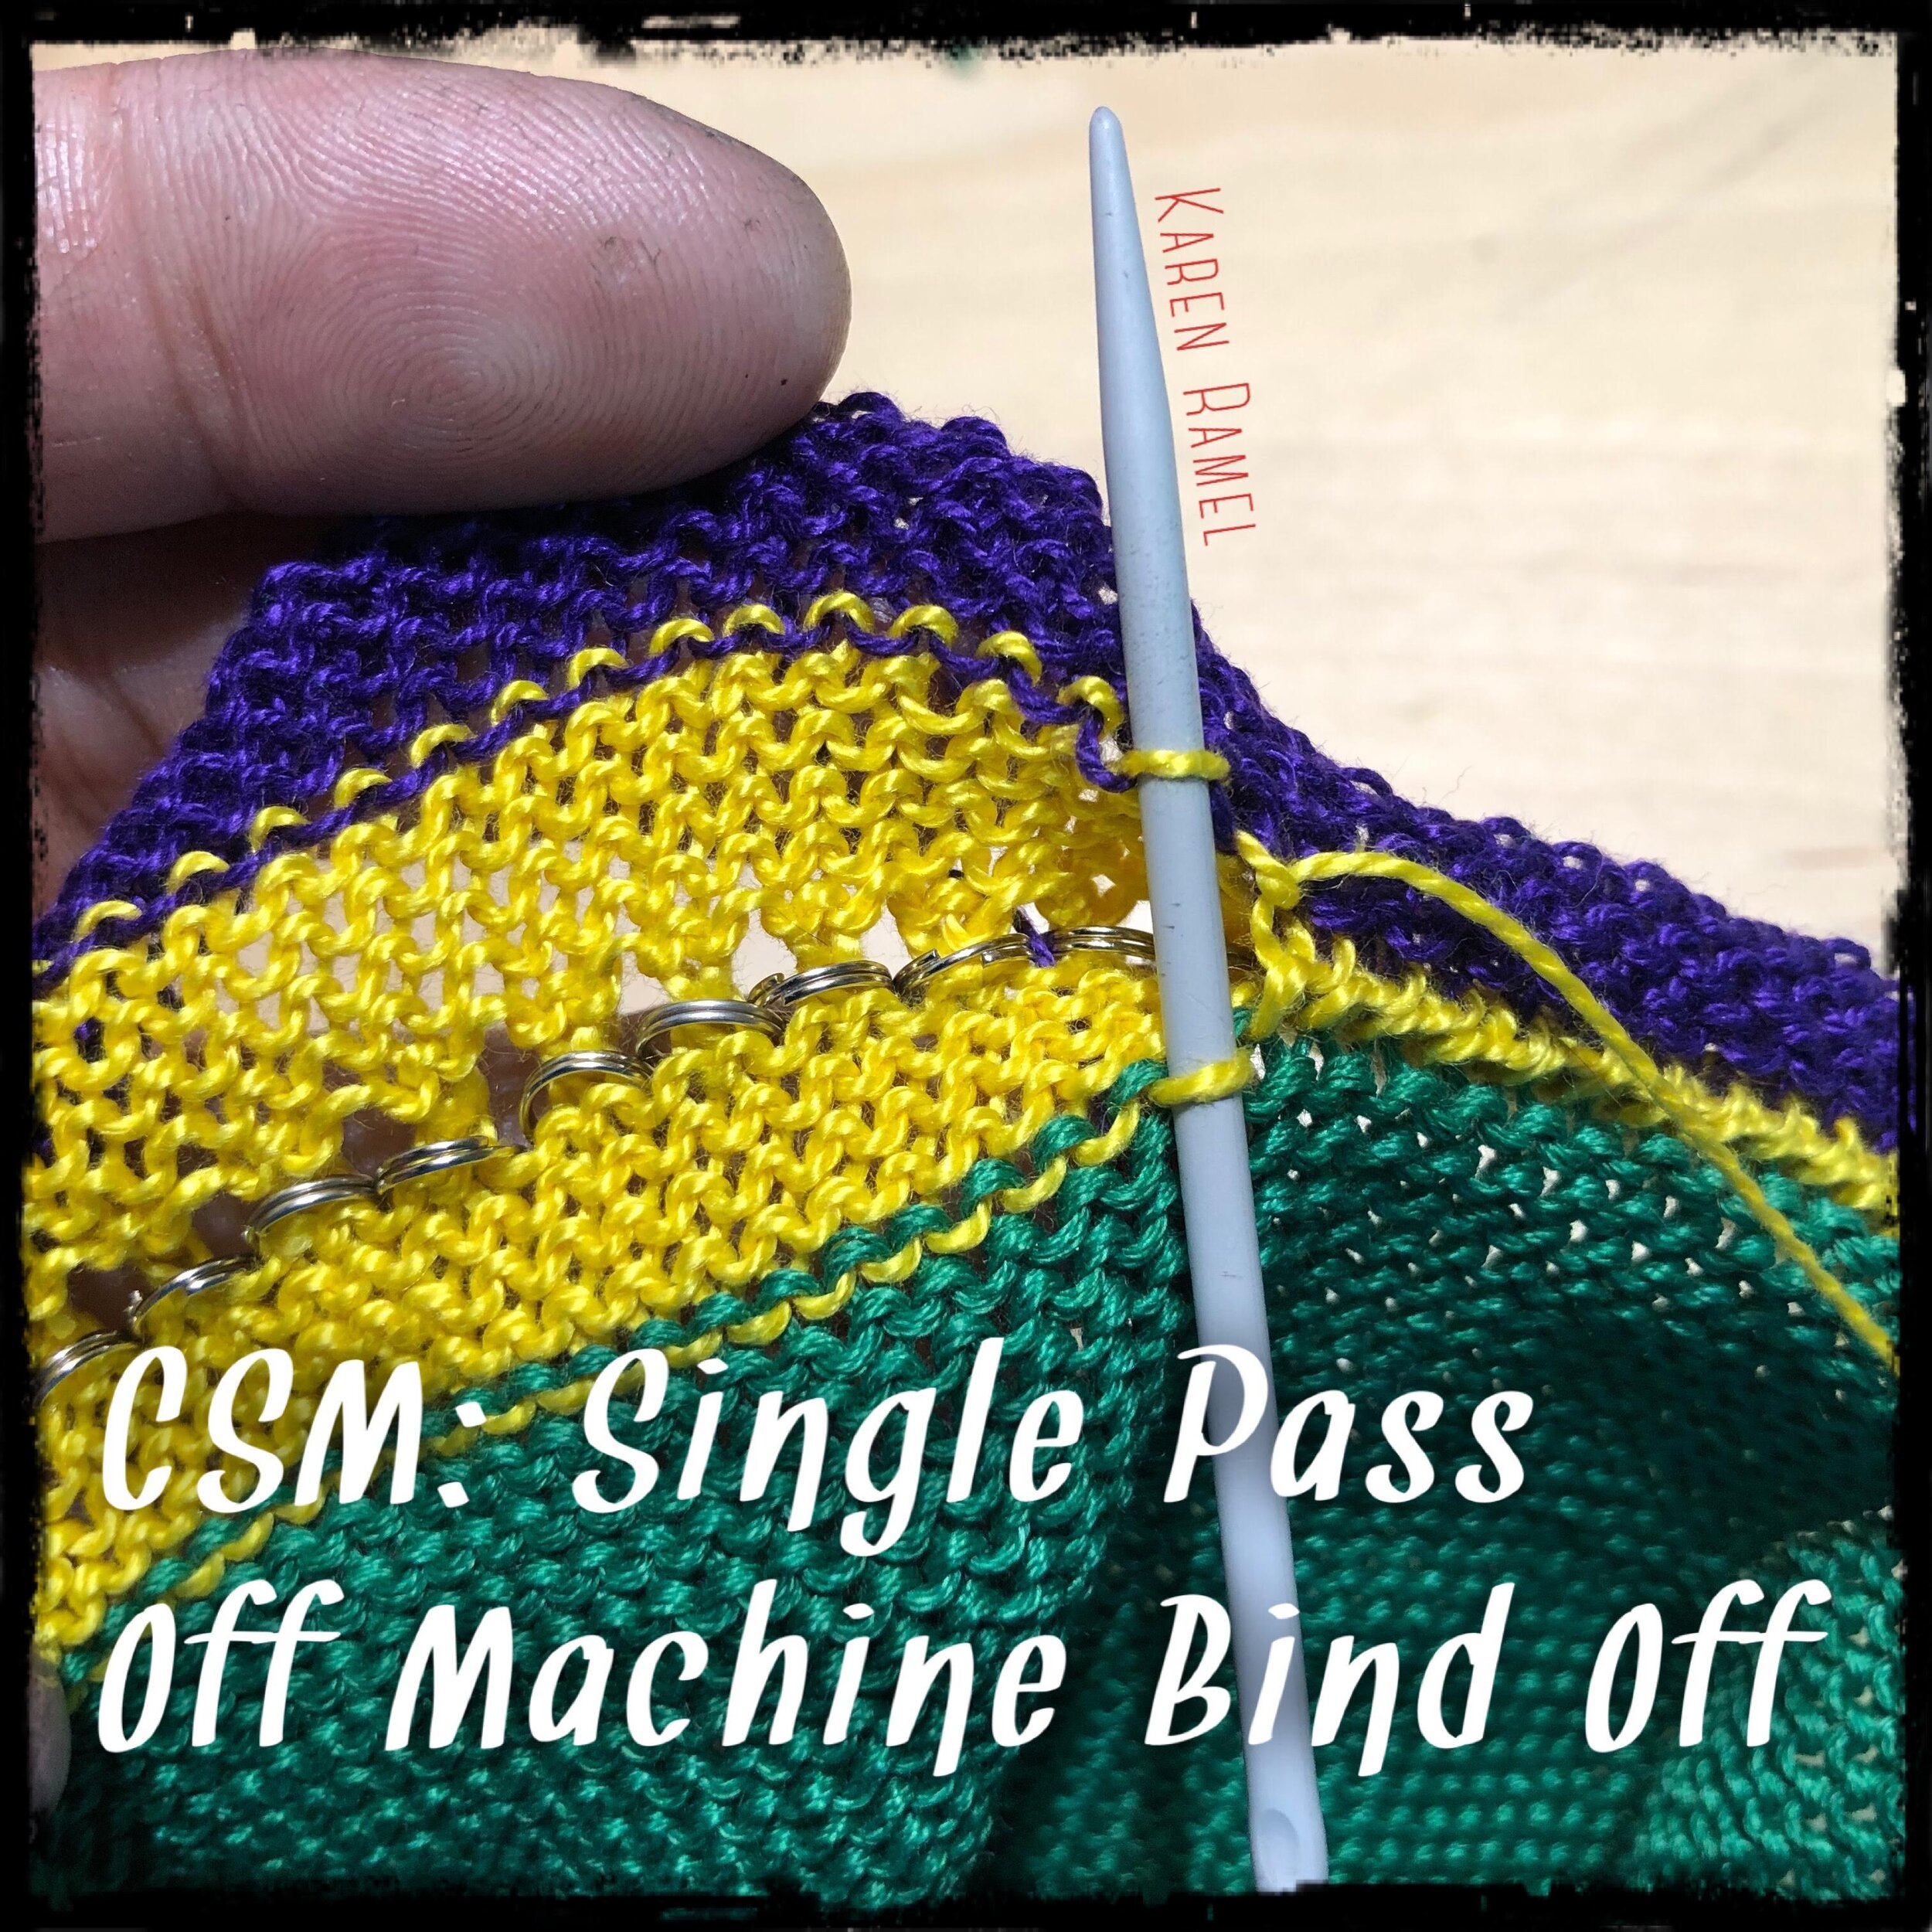 csm-single-pass-off-machine-bind-off_31498728387_o.jpg